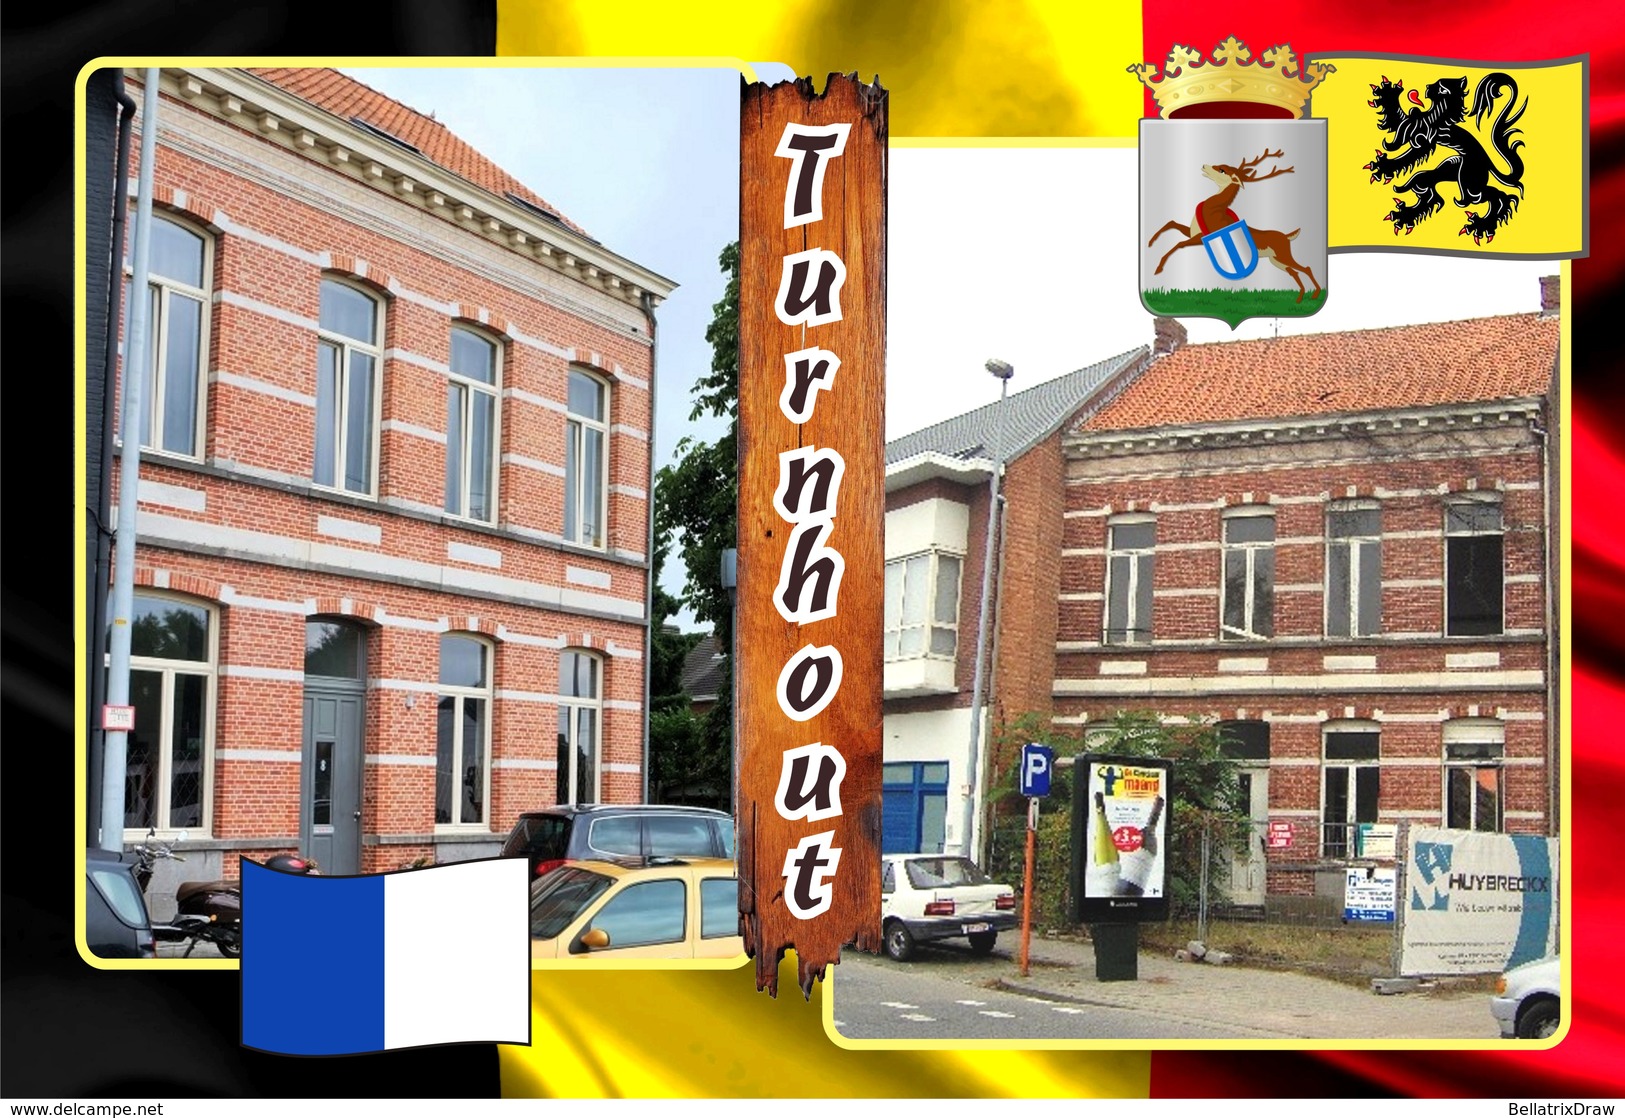 Postcards, REPRODUCTION, Municipalities of Belgium, Turnhout, duplex 140 to 187 - set of 48 pcs.